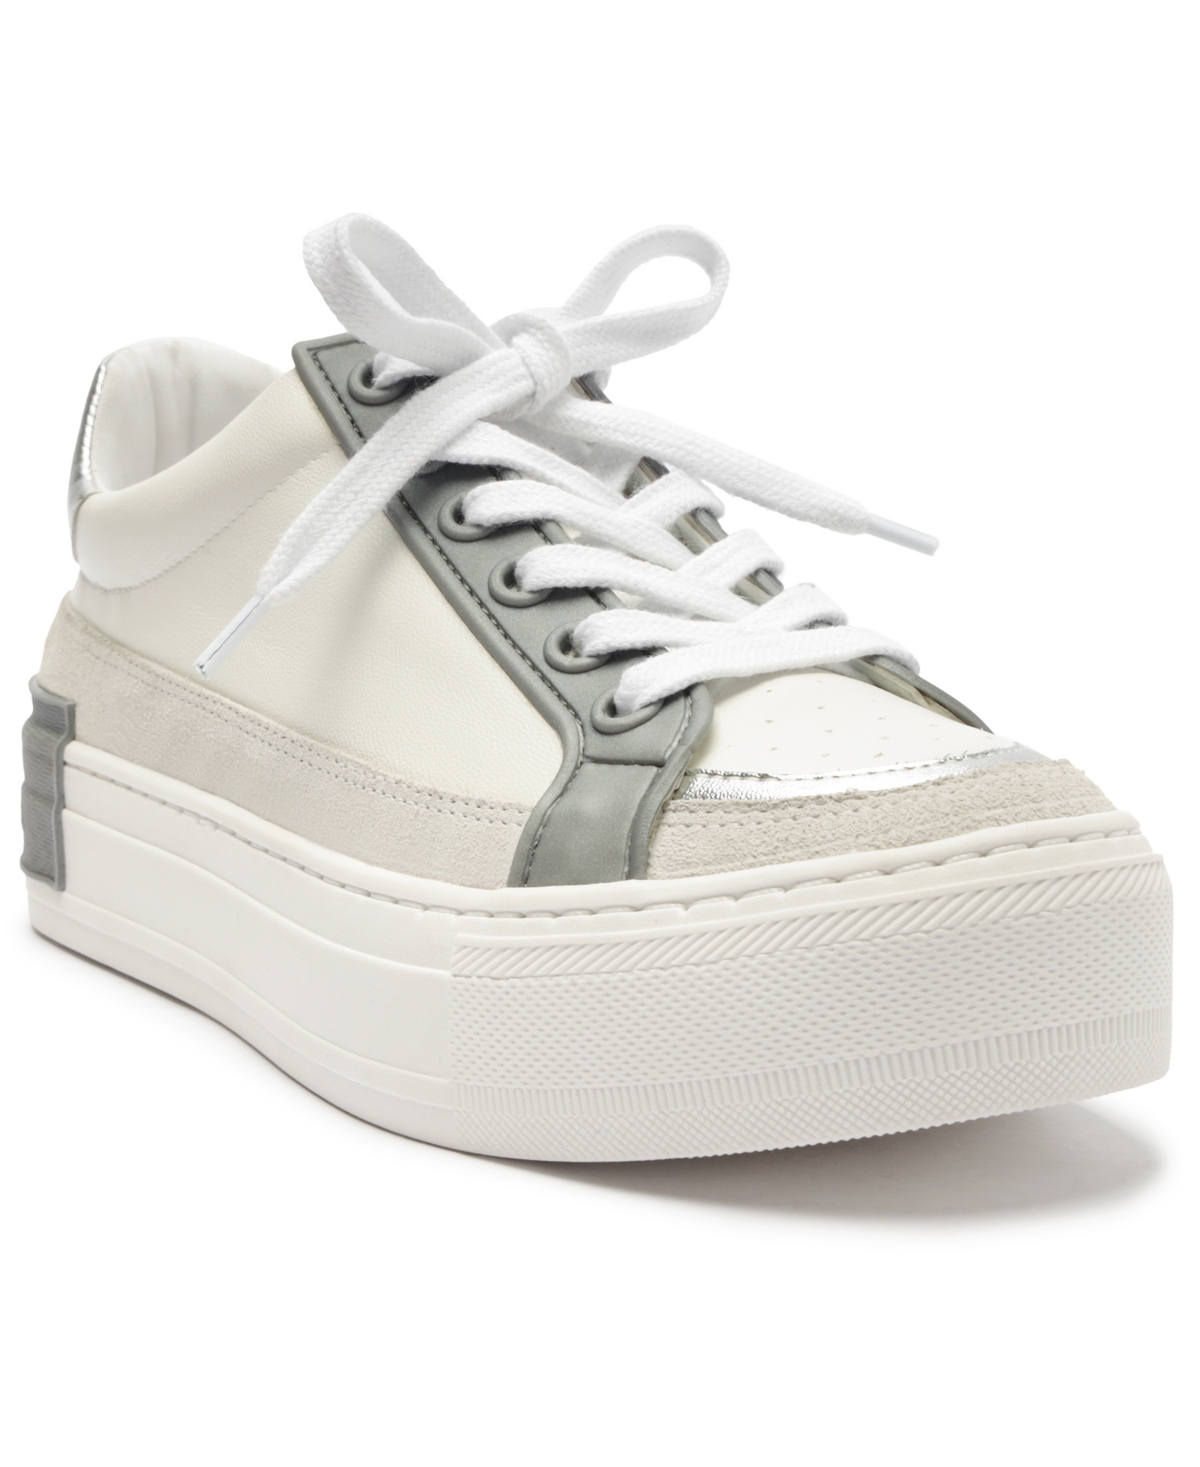 Women's Stevie Flatform Sneakers - White Silver Multi